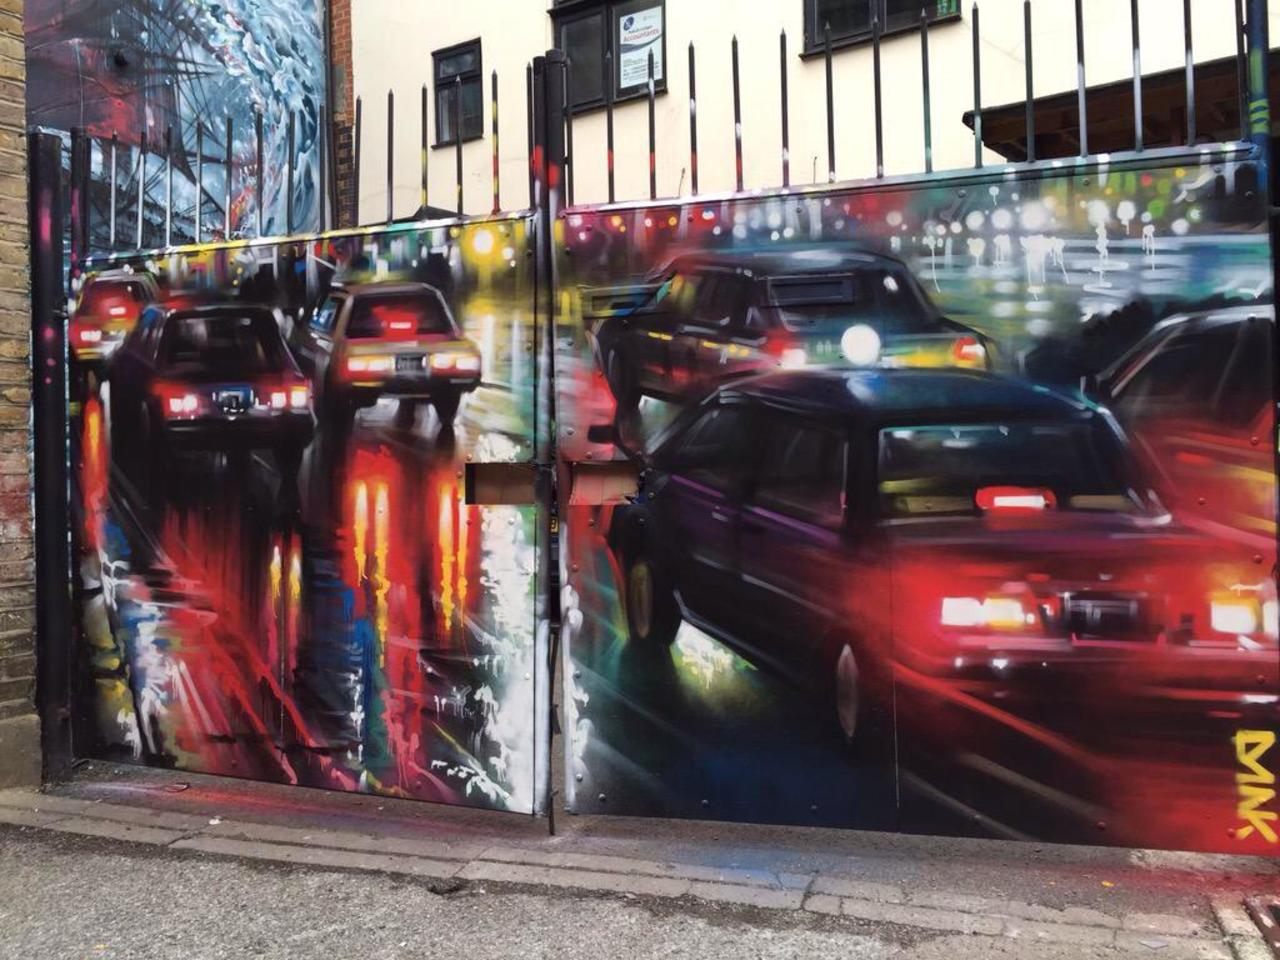 RT @GoogleStreetArt: New Street Art by @DanKitchener in Brick Lane London 

#art #graffiti #mural #streetart http://t.co/Uw3trGQ2d1